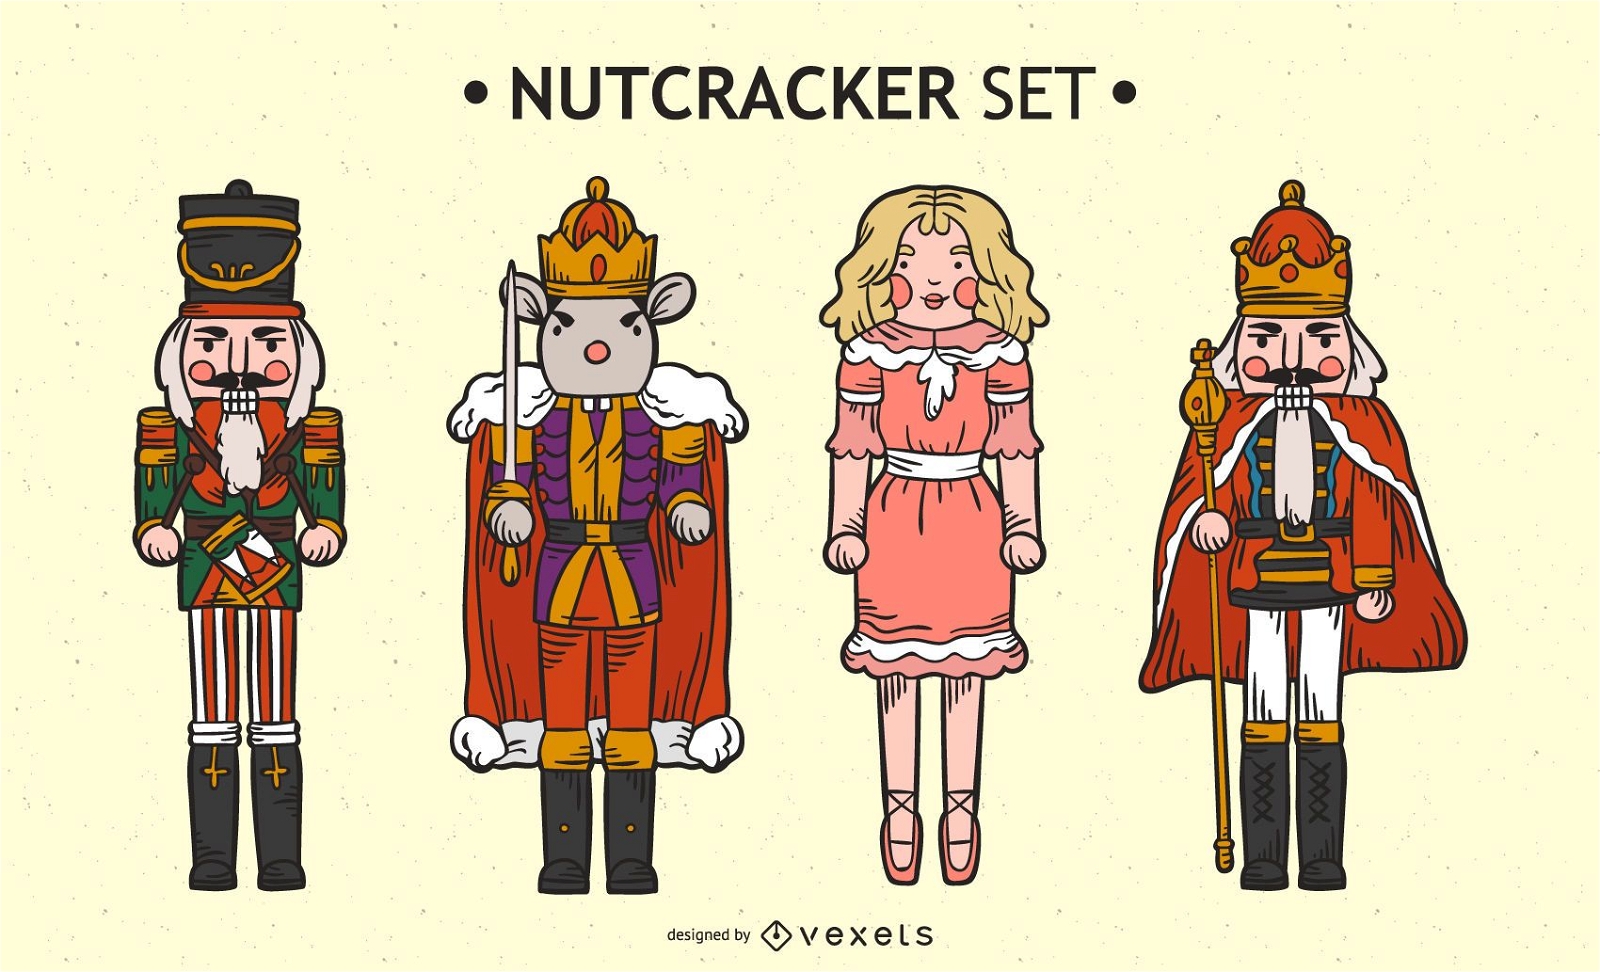 Nutcracker character set